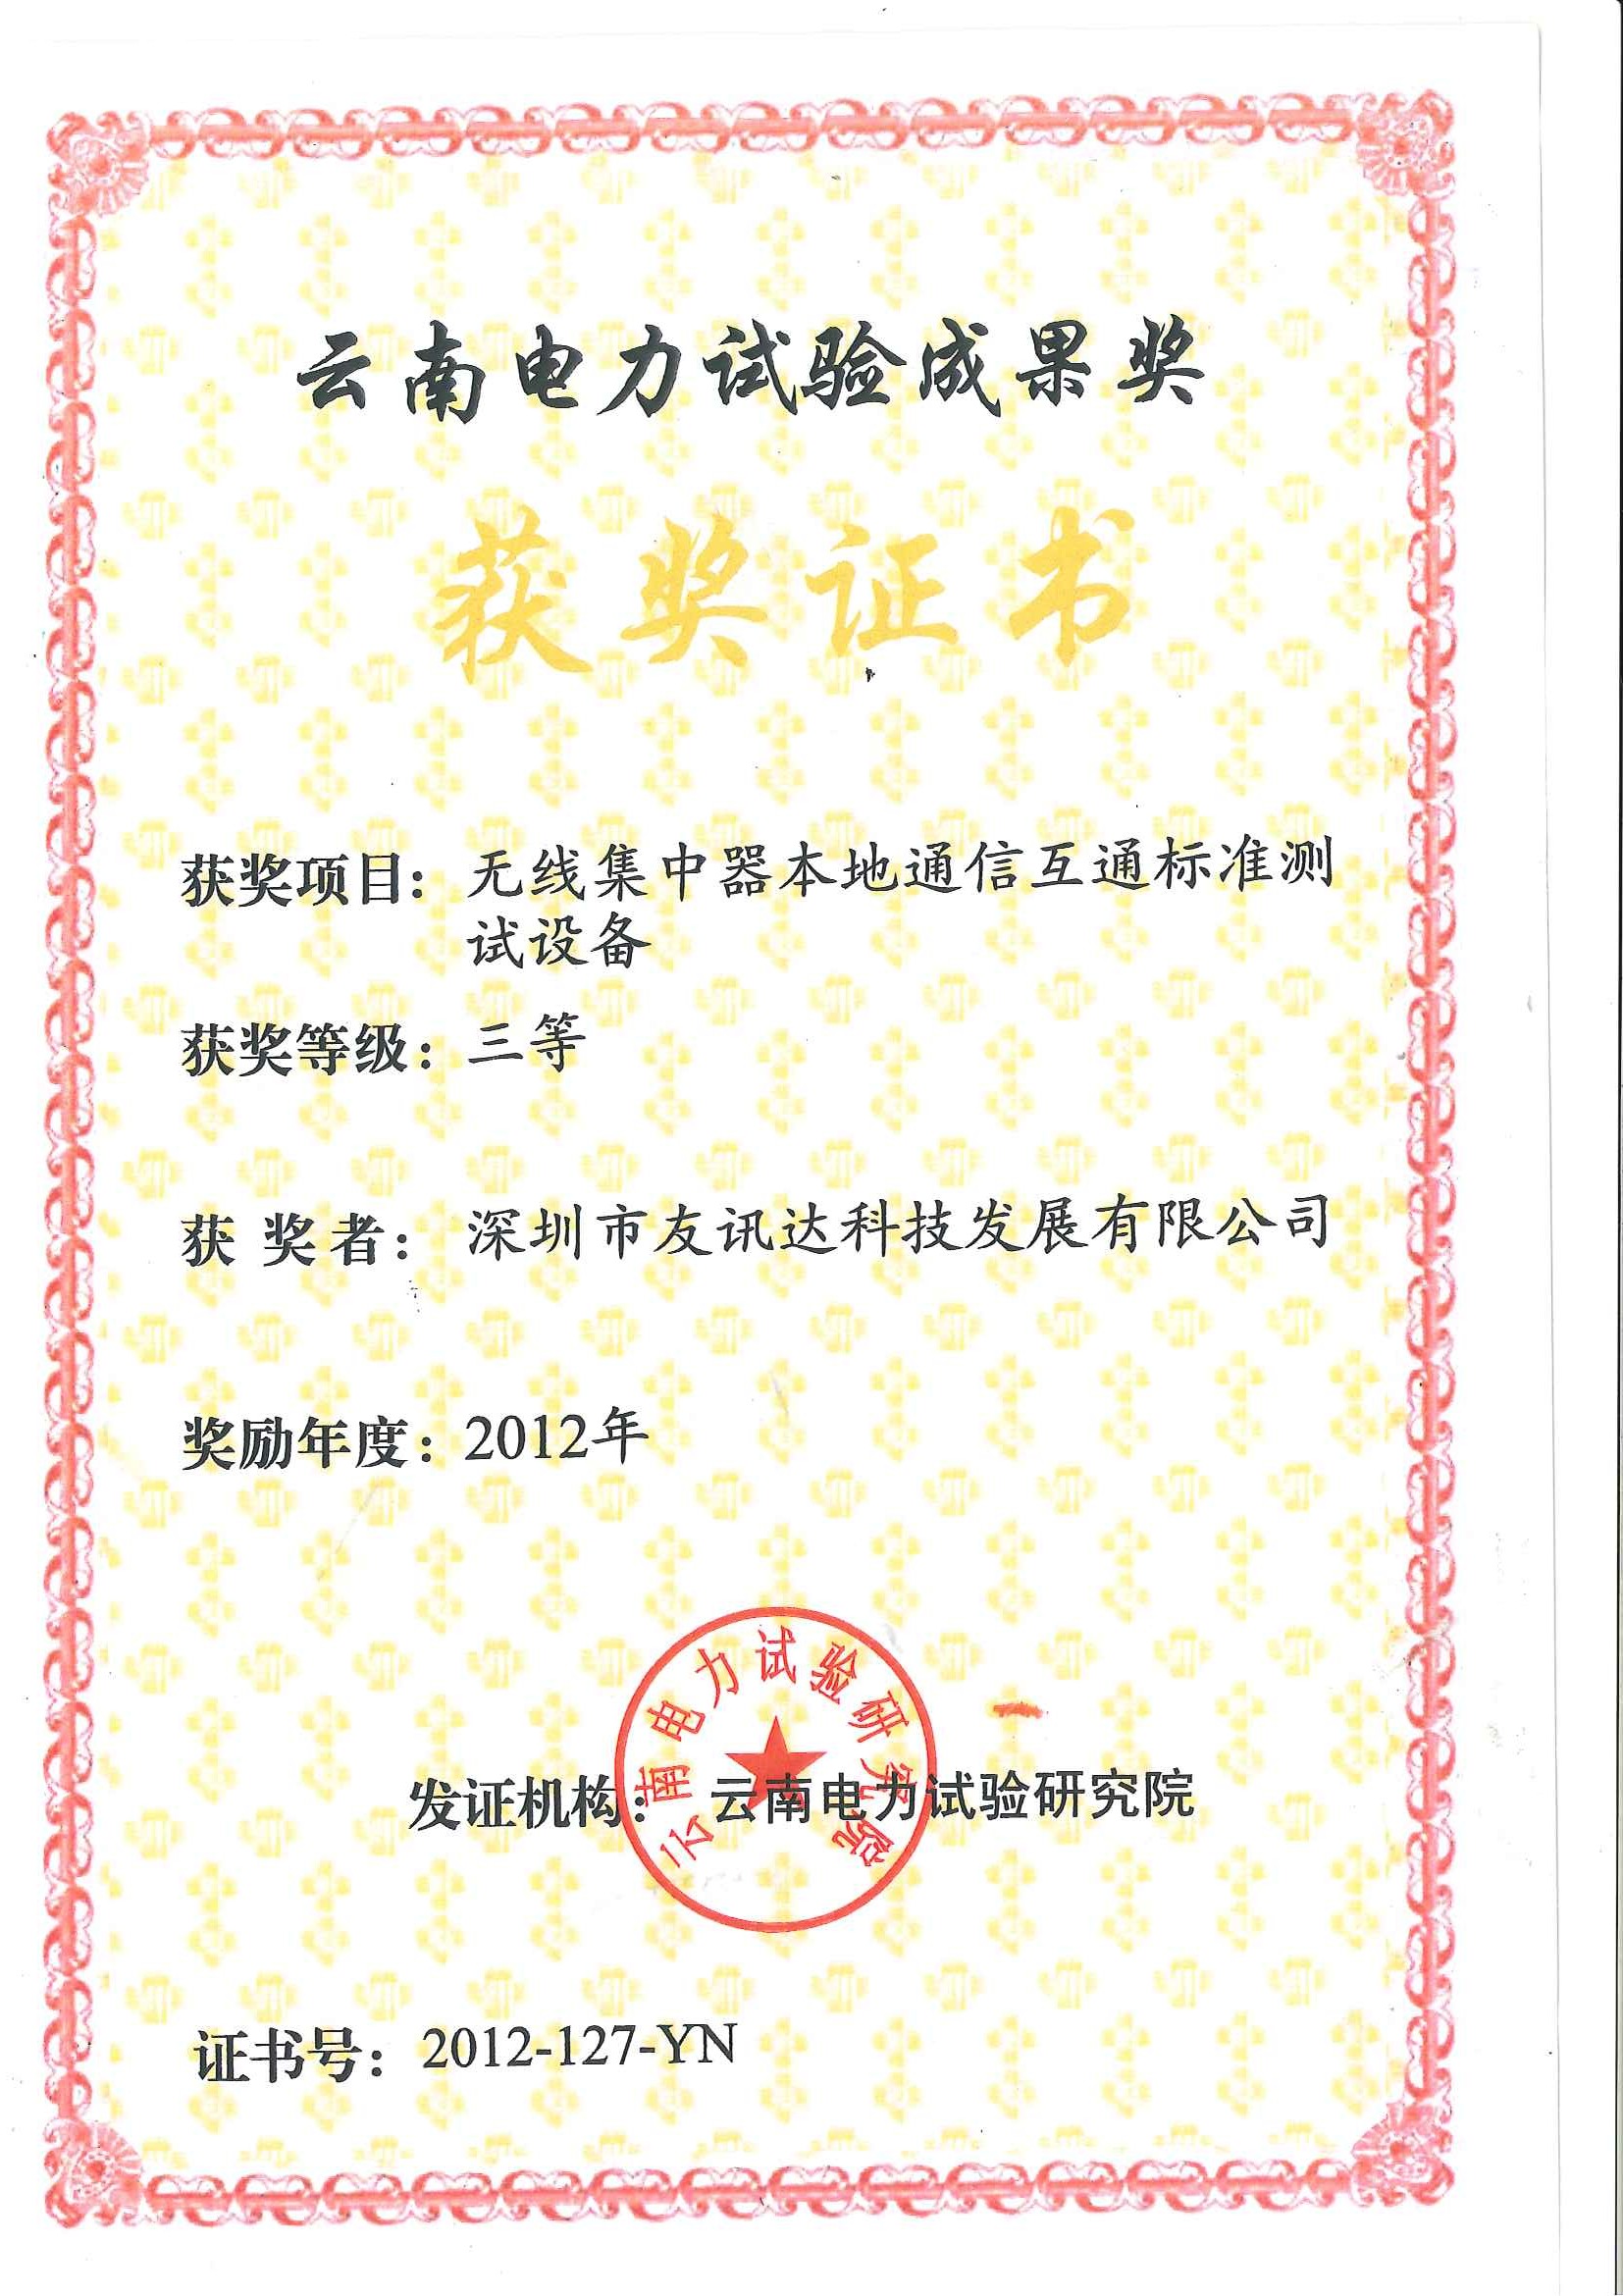 Yunnan Electric Power Test Achievement Award